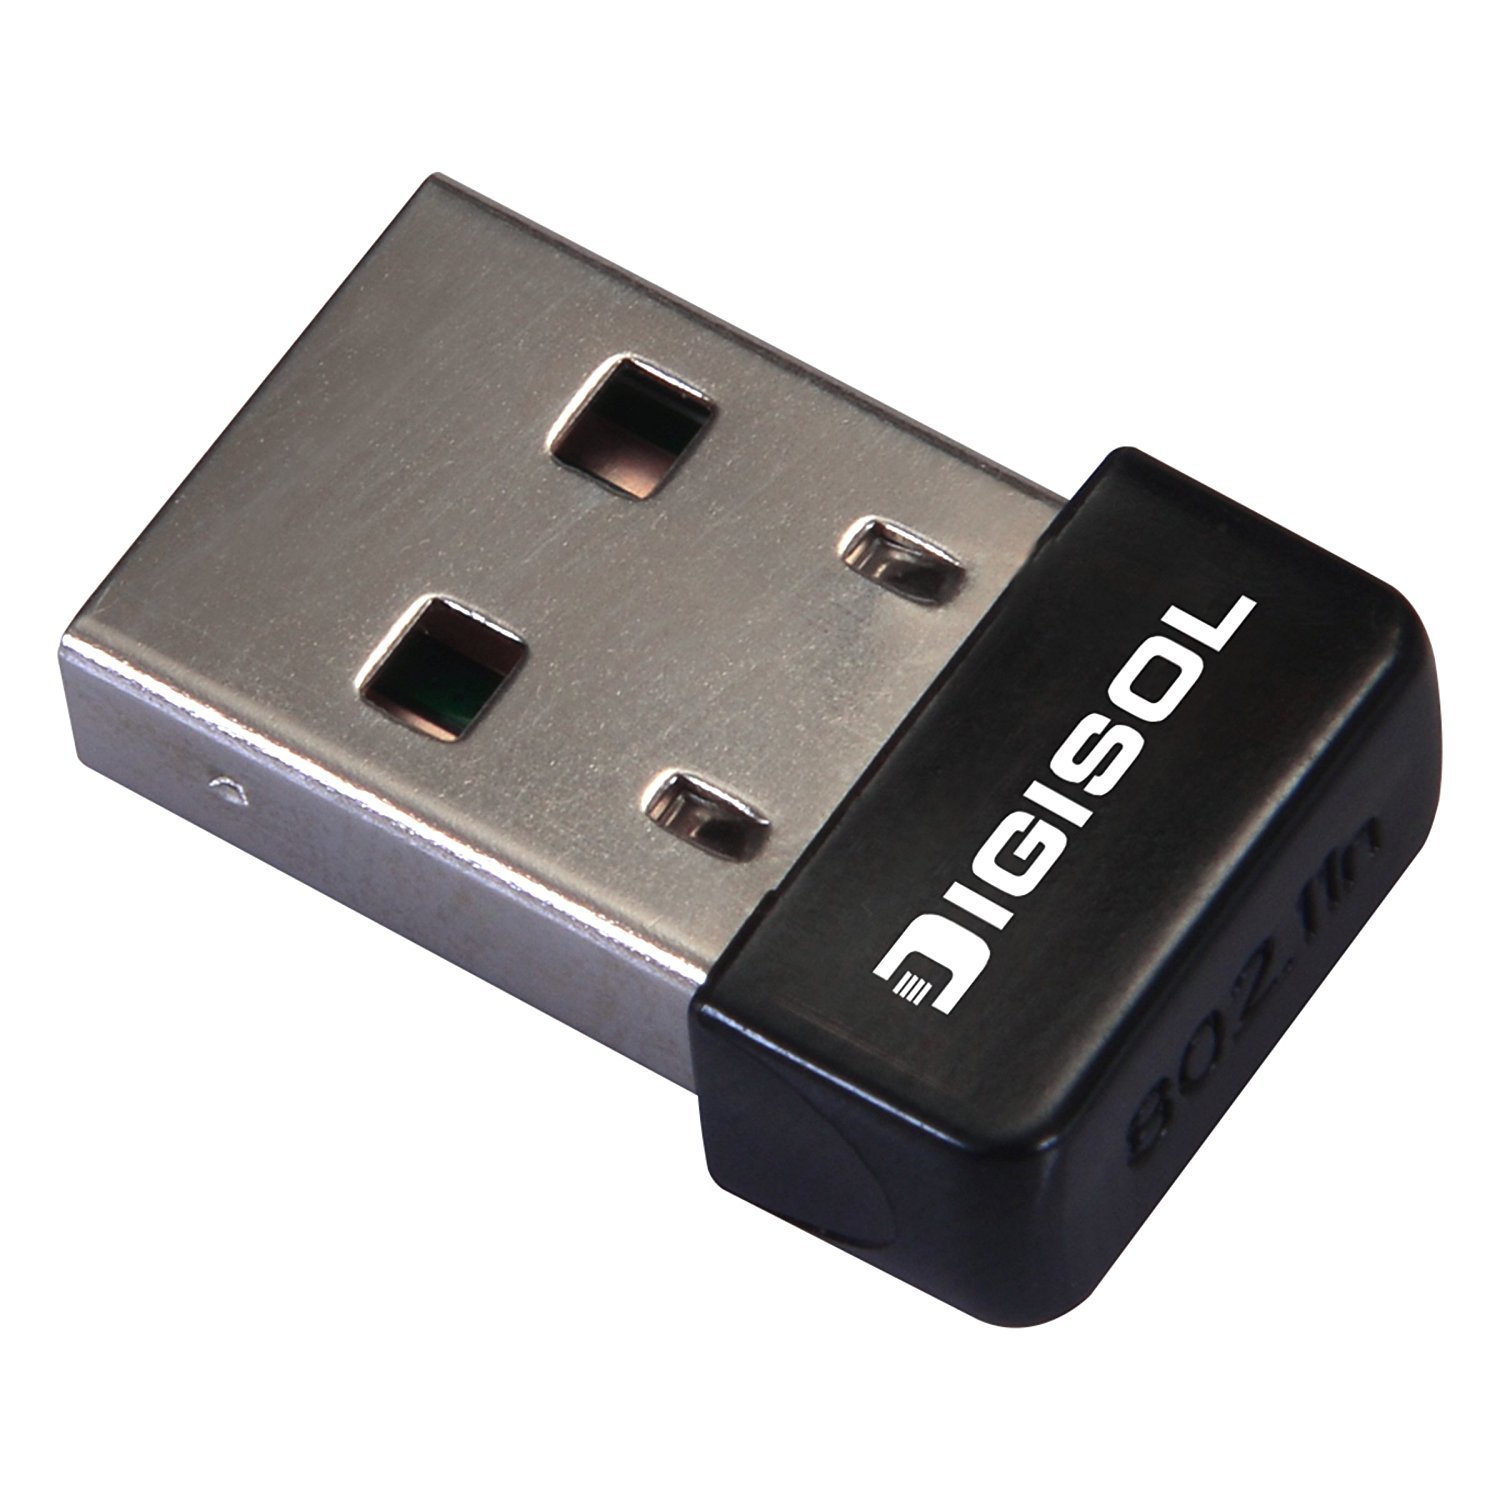 DRIVER UPDATE: DG-WN3150NU USB